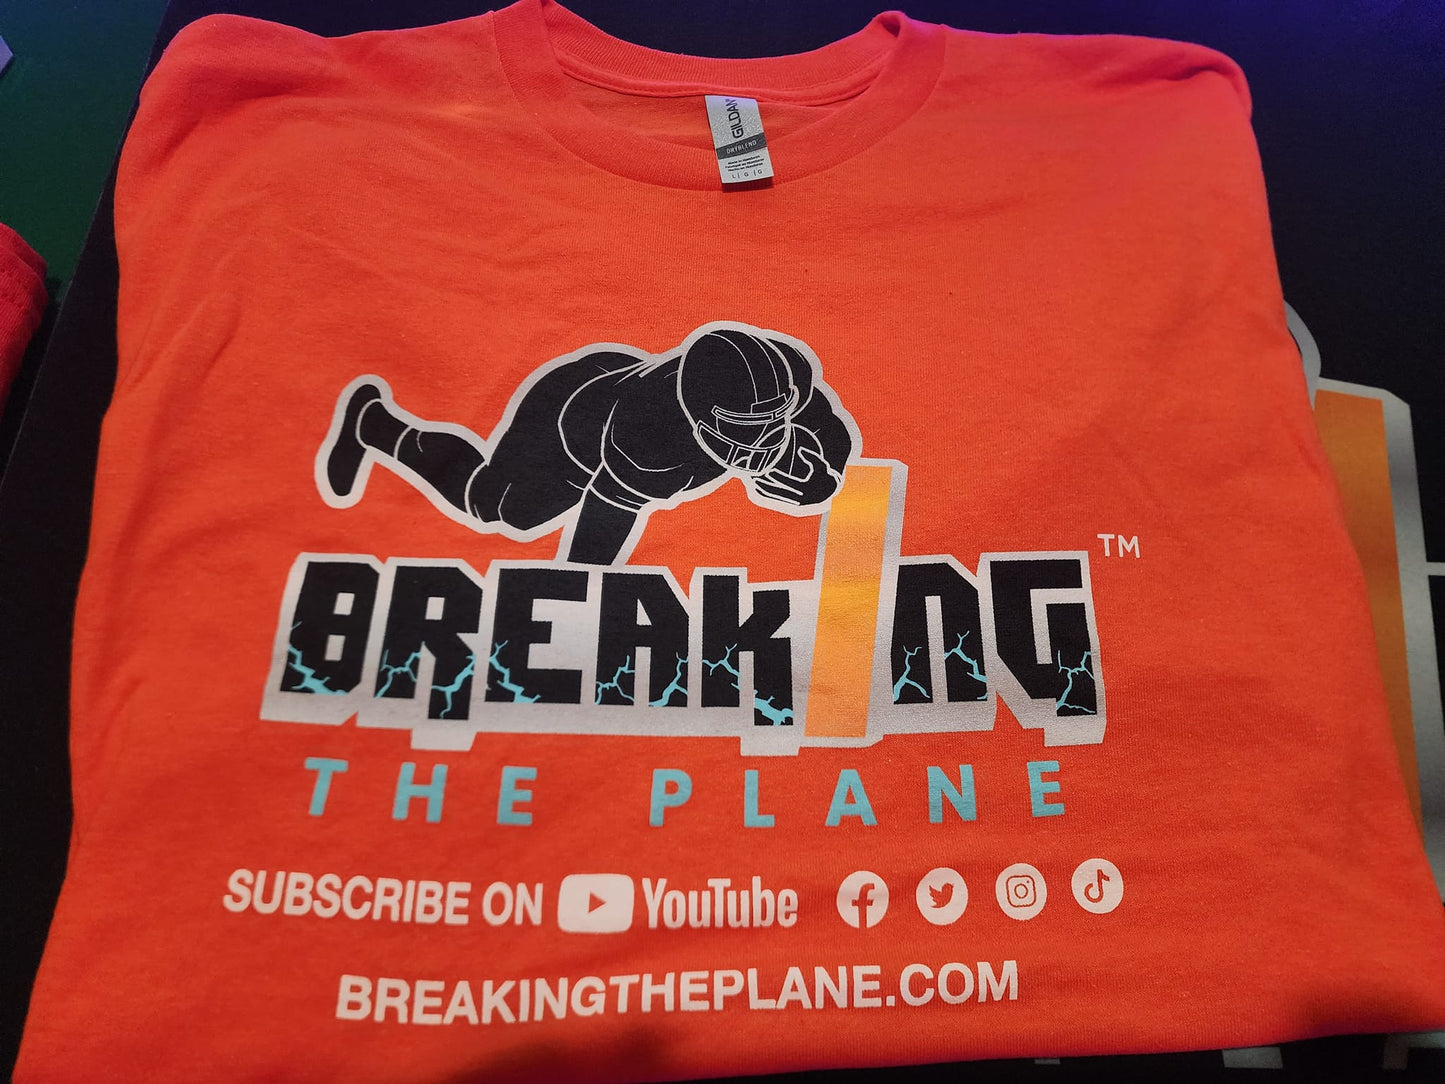 Breaking The Plane Orange T-Shirt